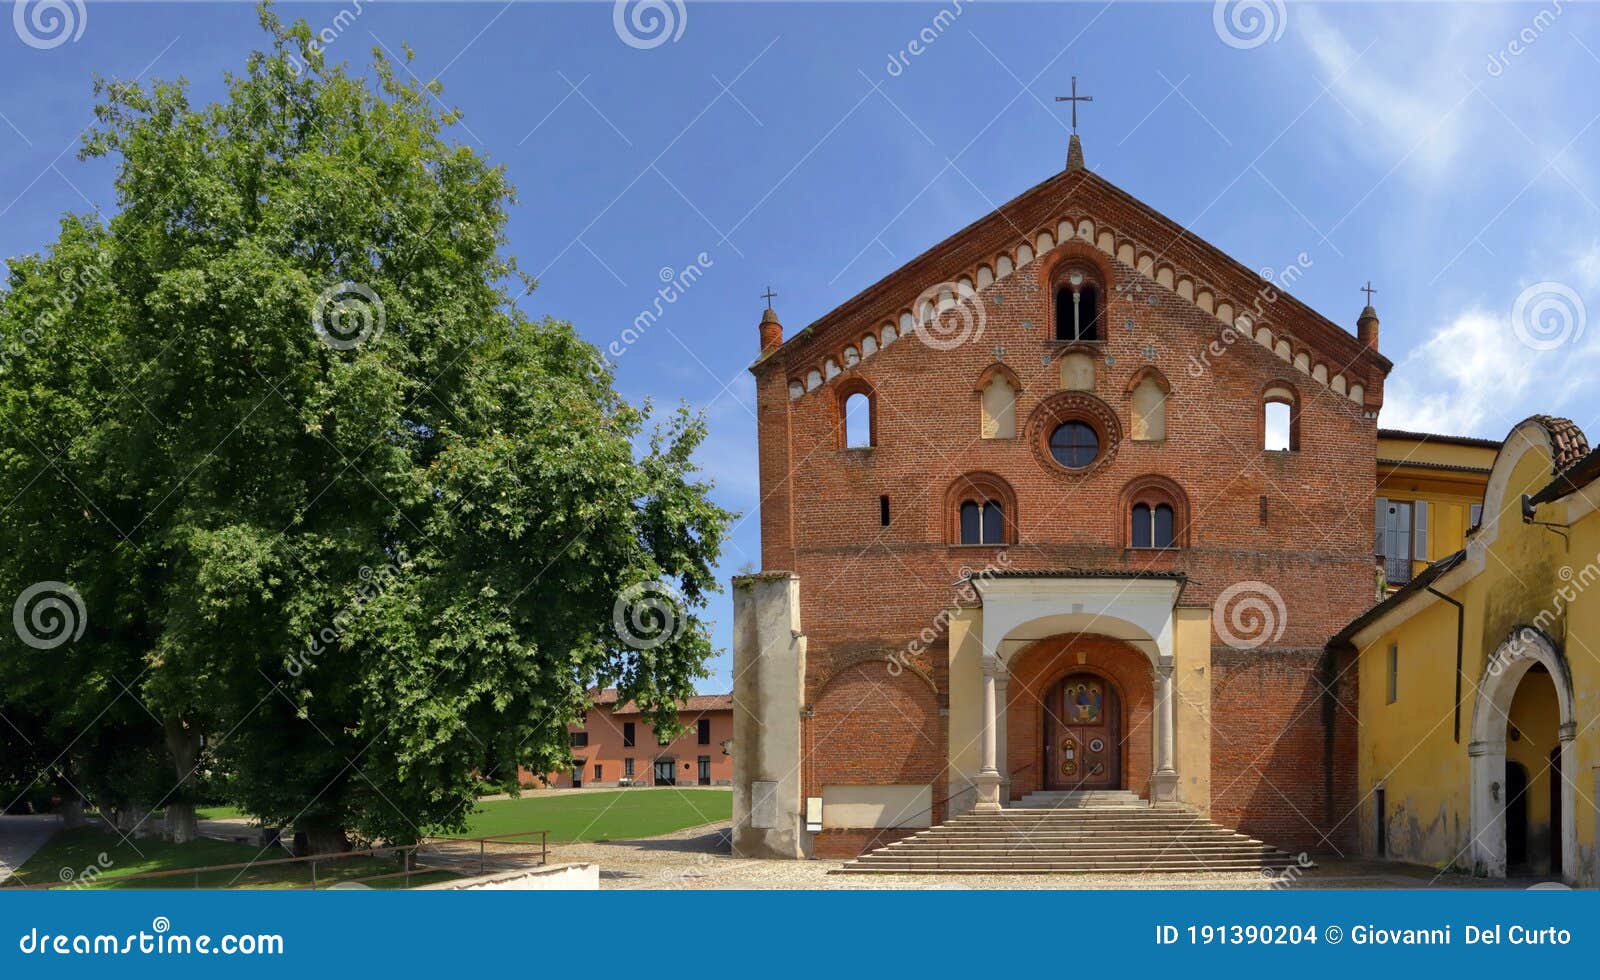 abbazia di morimondo, italia, morimond o abbey, italy